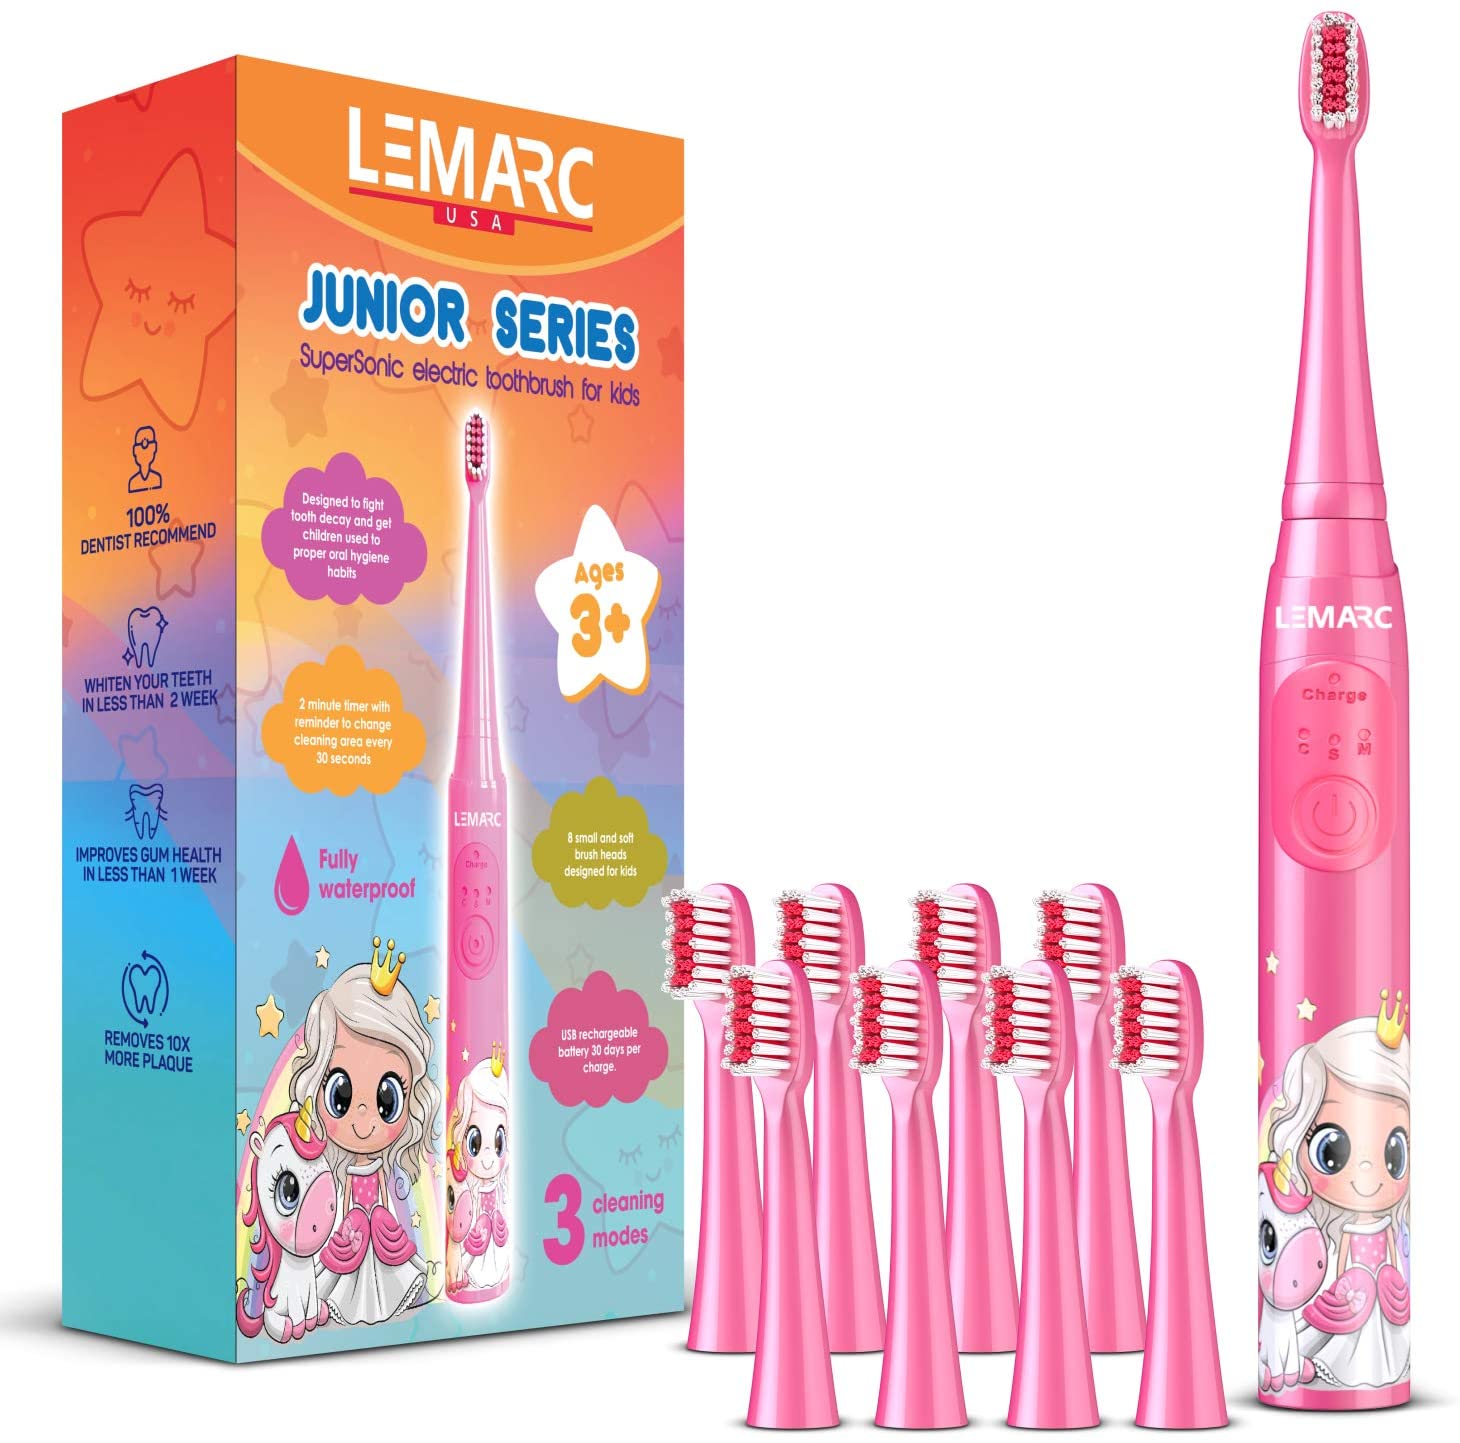 8. LEMARC USA Kids Electric Toothbrush